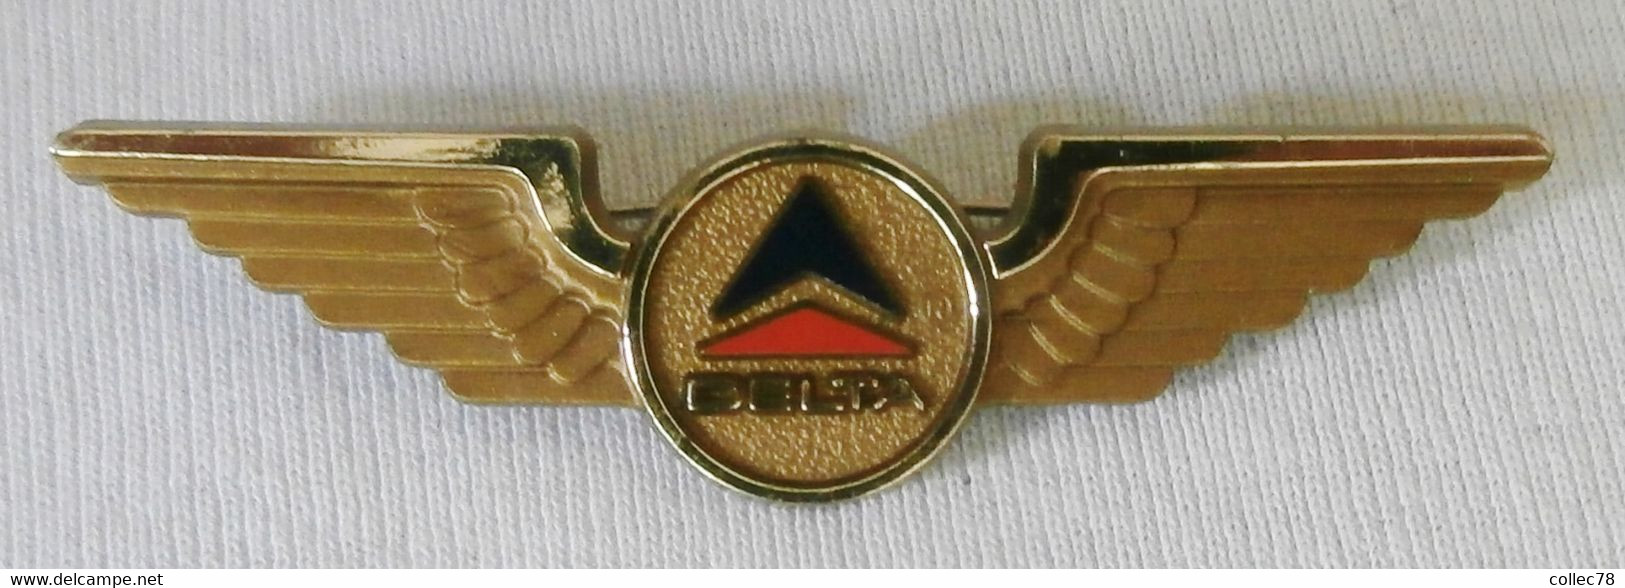 Airline Pilot Wings GOLD AILE DE POITRINE OR COMPAGNIE AERIENNE 